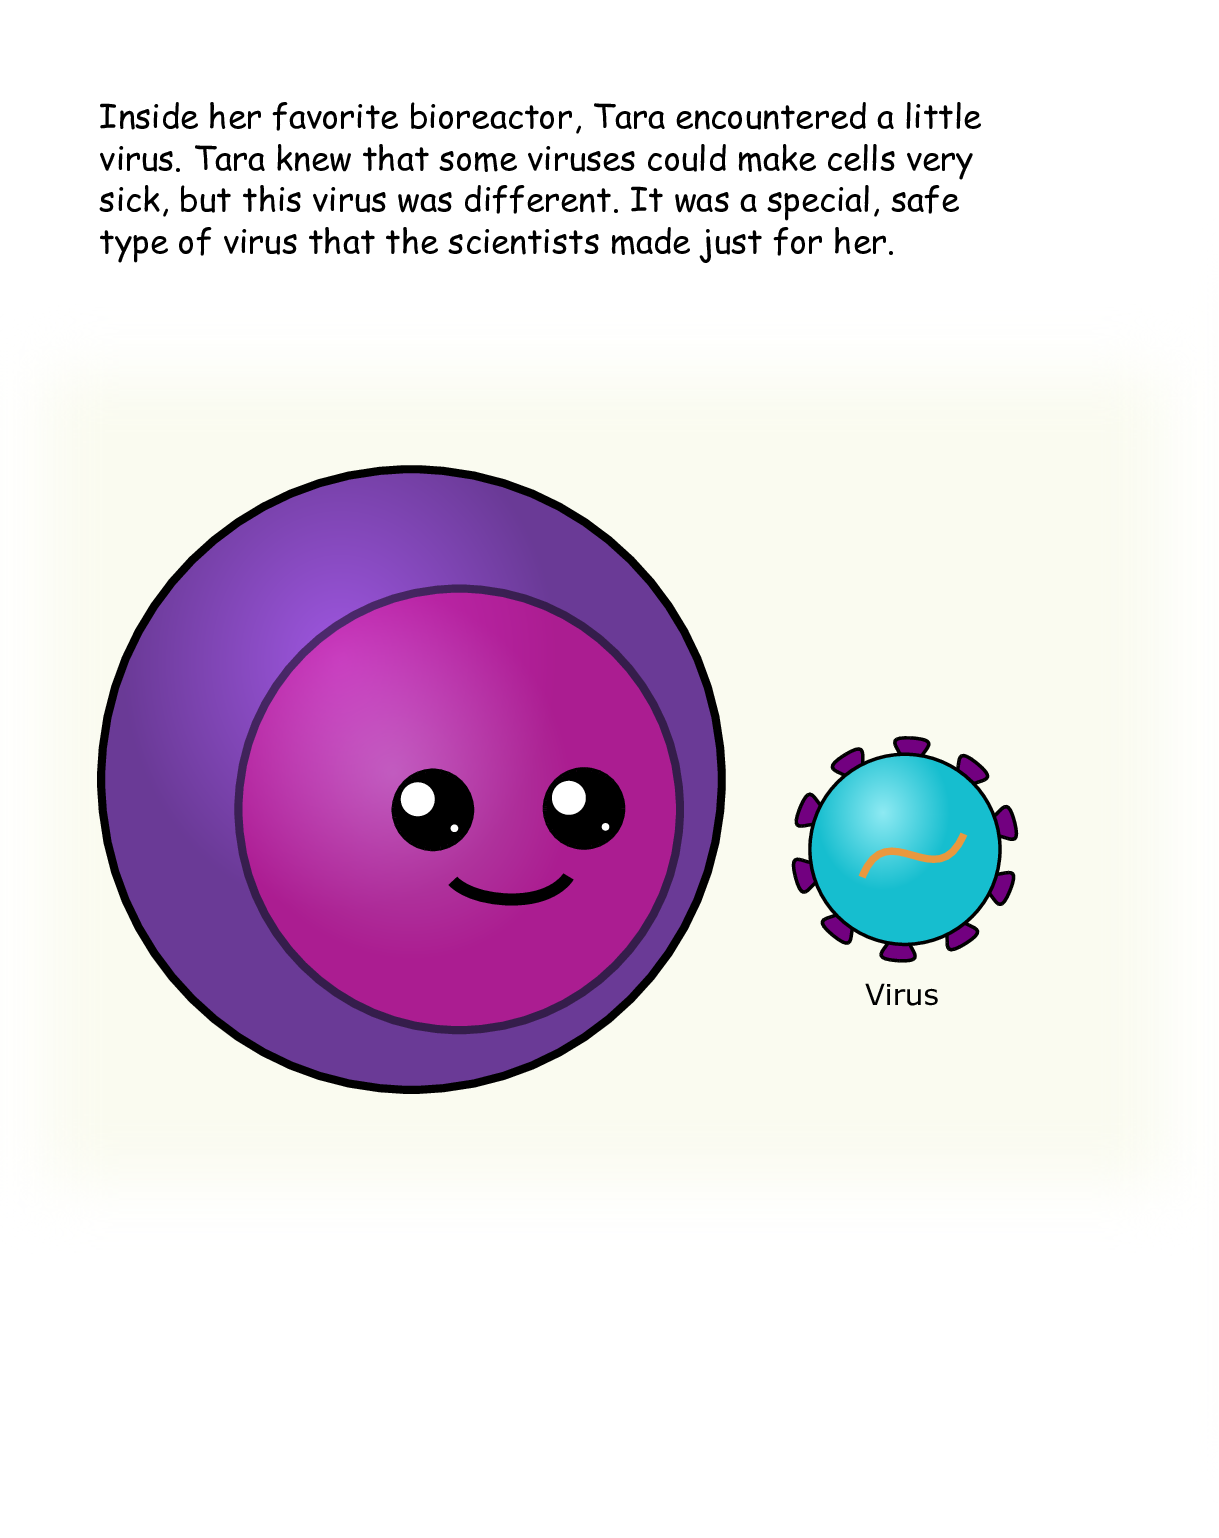 Page 12 (Virus)